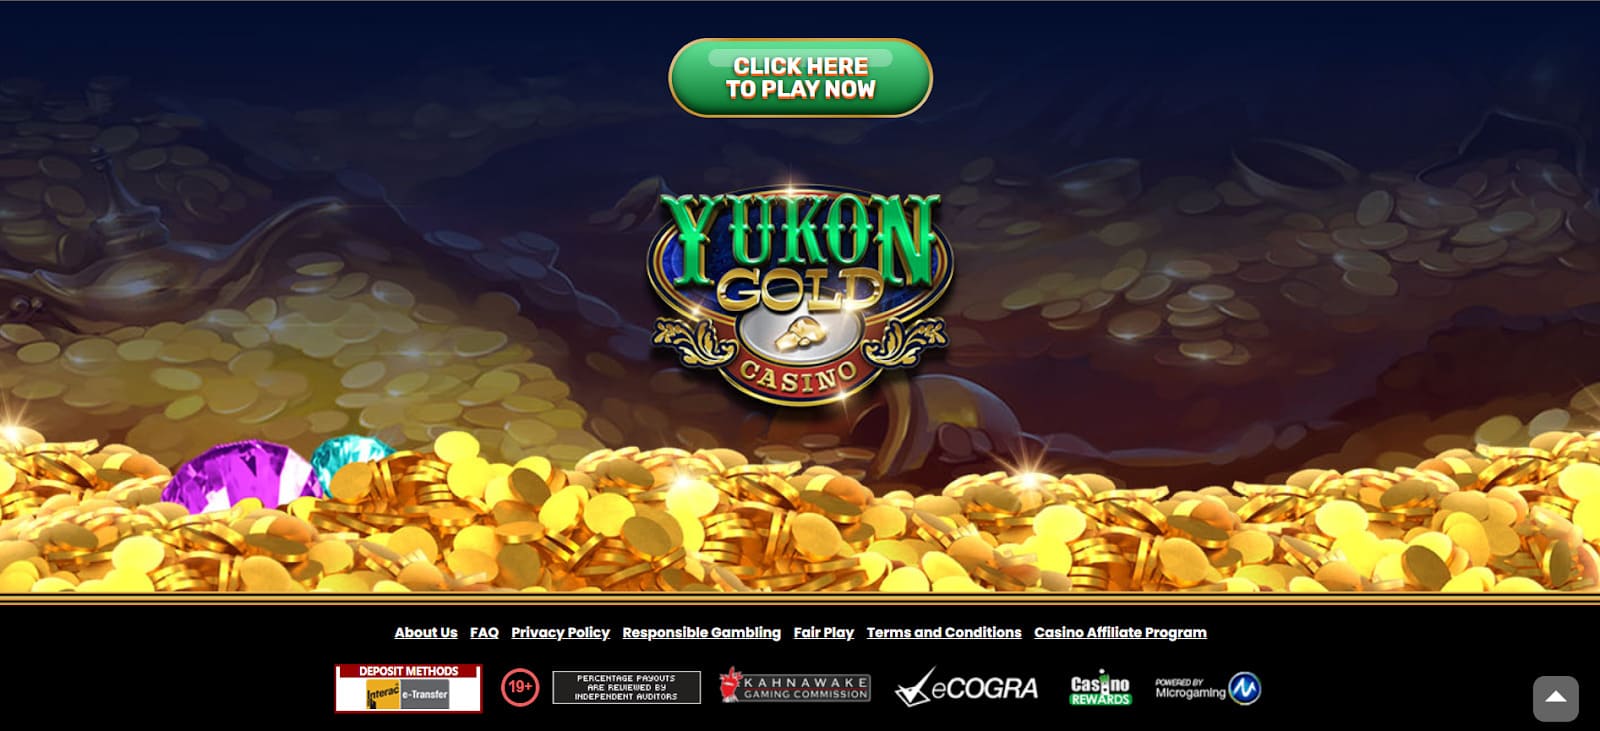 Yukon Gold Casino Games Review